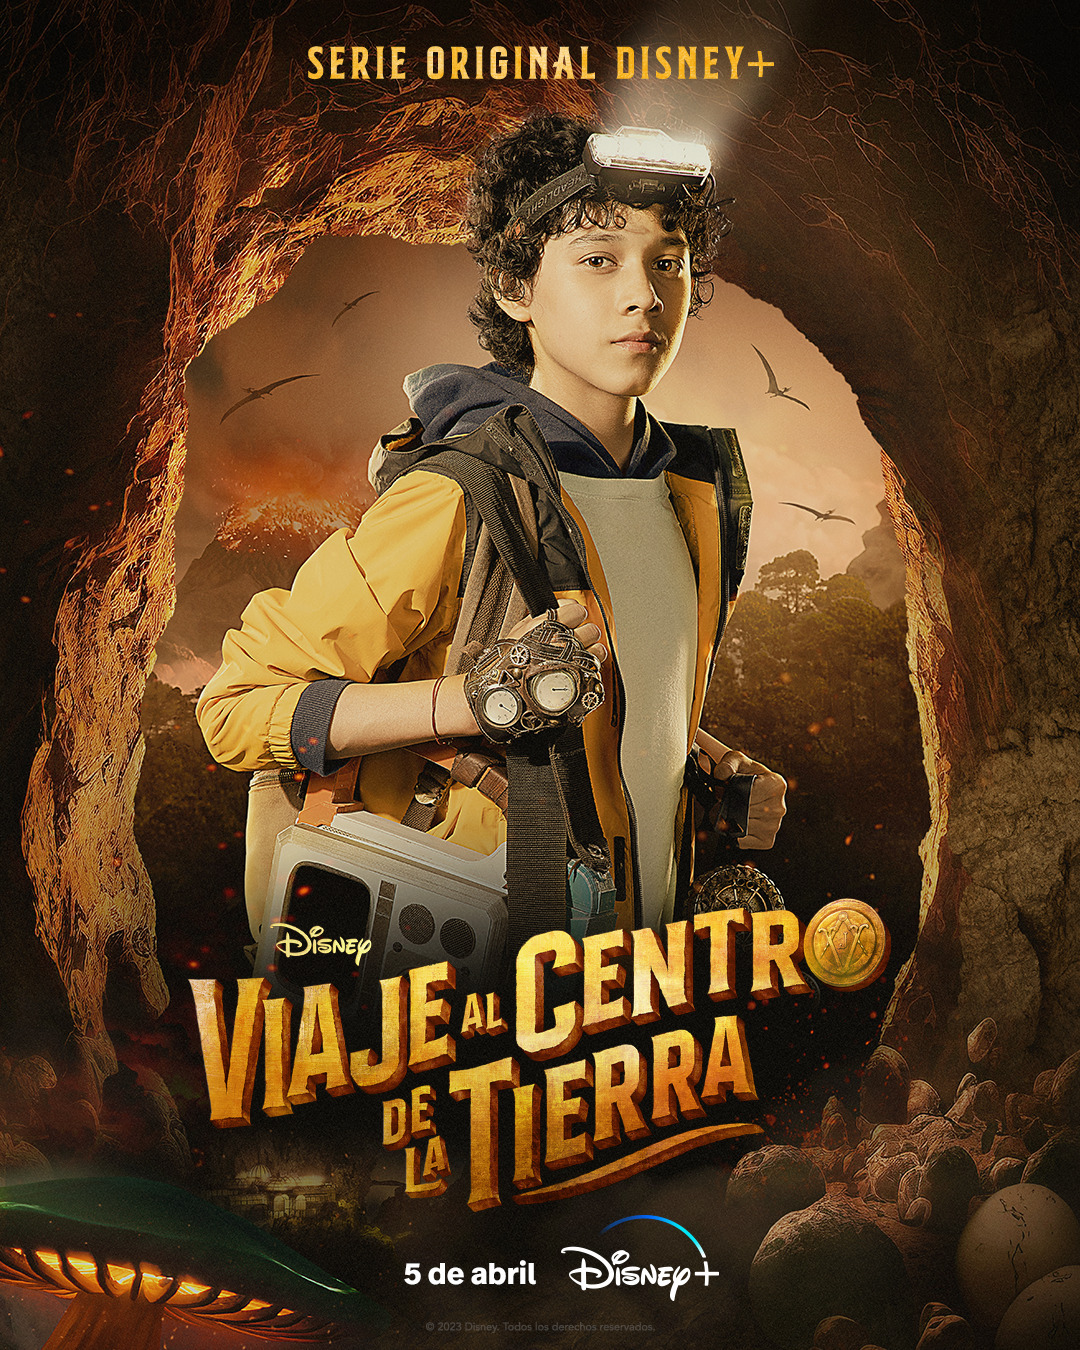 Extra Large TV Poster Image for Viaje al centro de la tierra (#4 of 8)